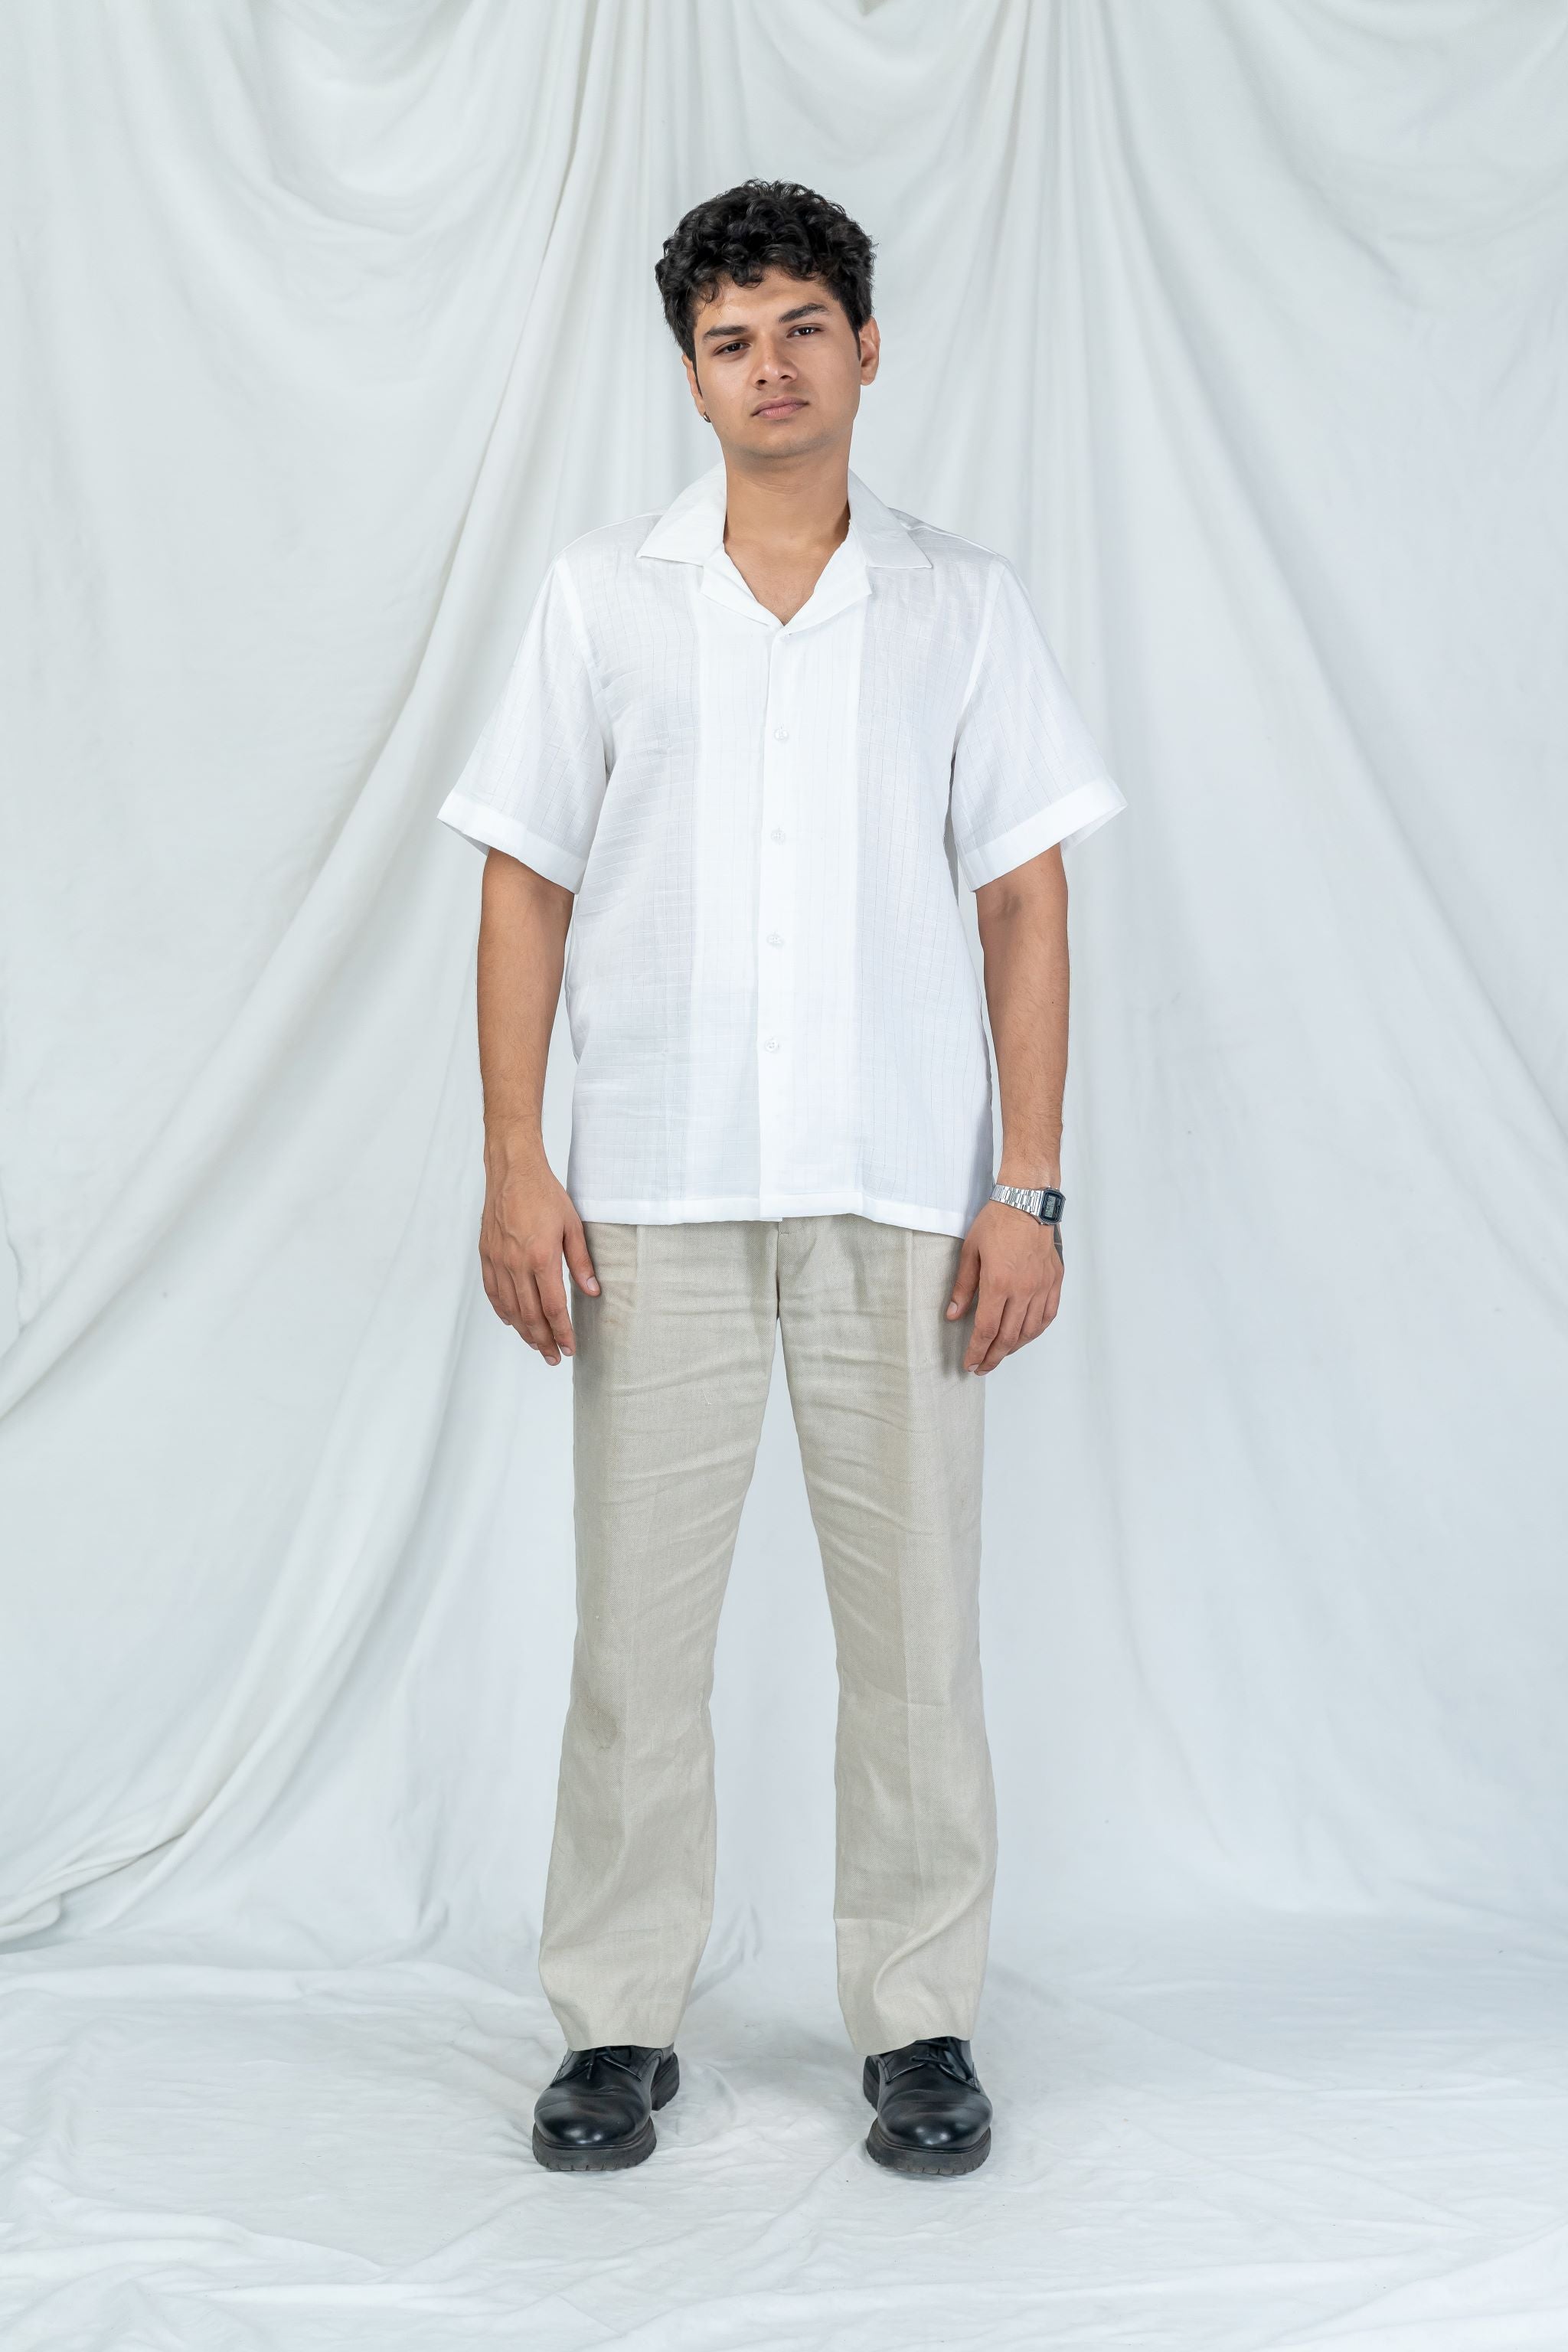 Swan White Shirt